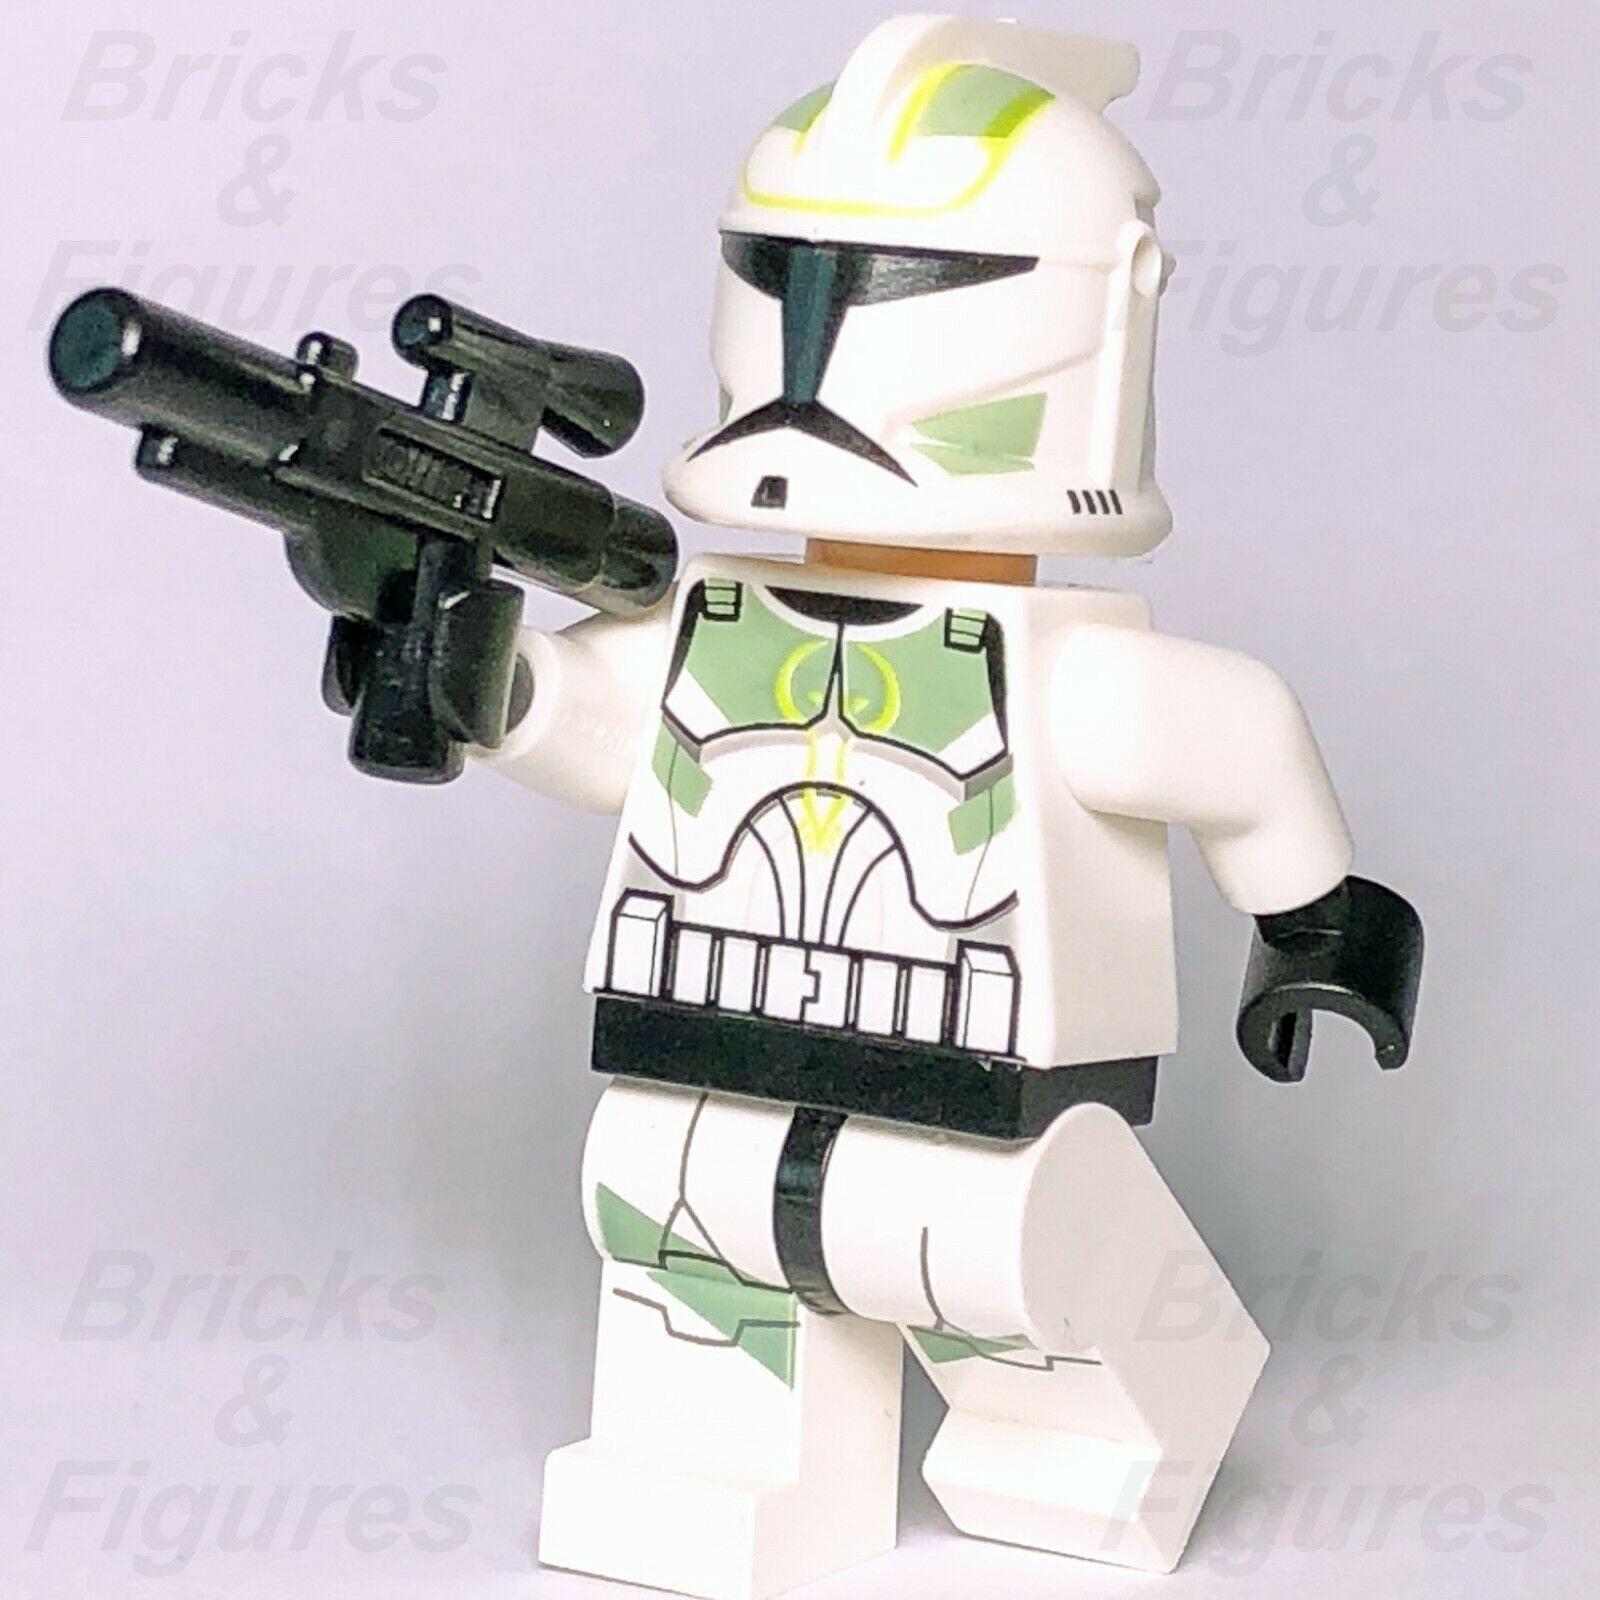 New Star Wars LEGO Clone Trooper with Sand Green Markings Minifigure 7913 - Bricks & Figures